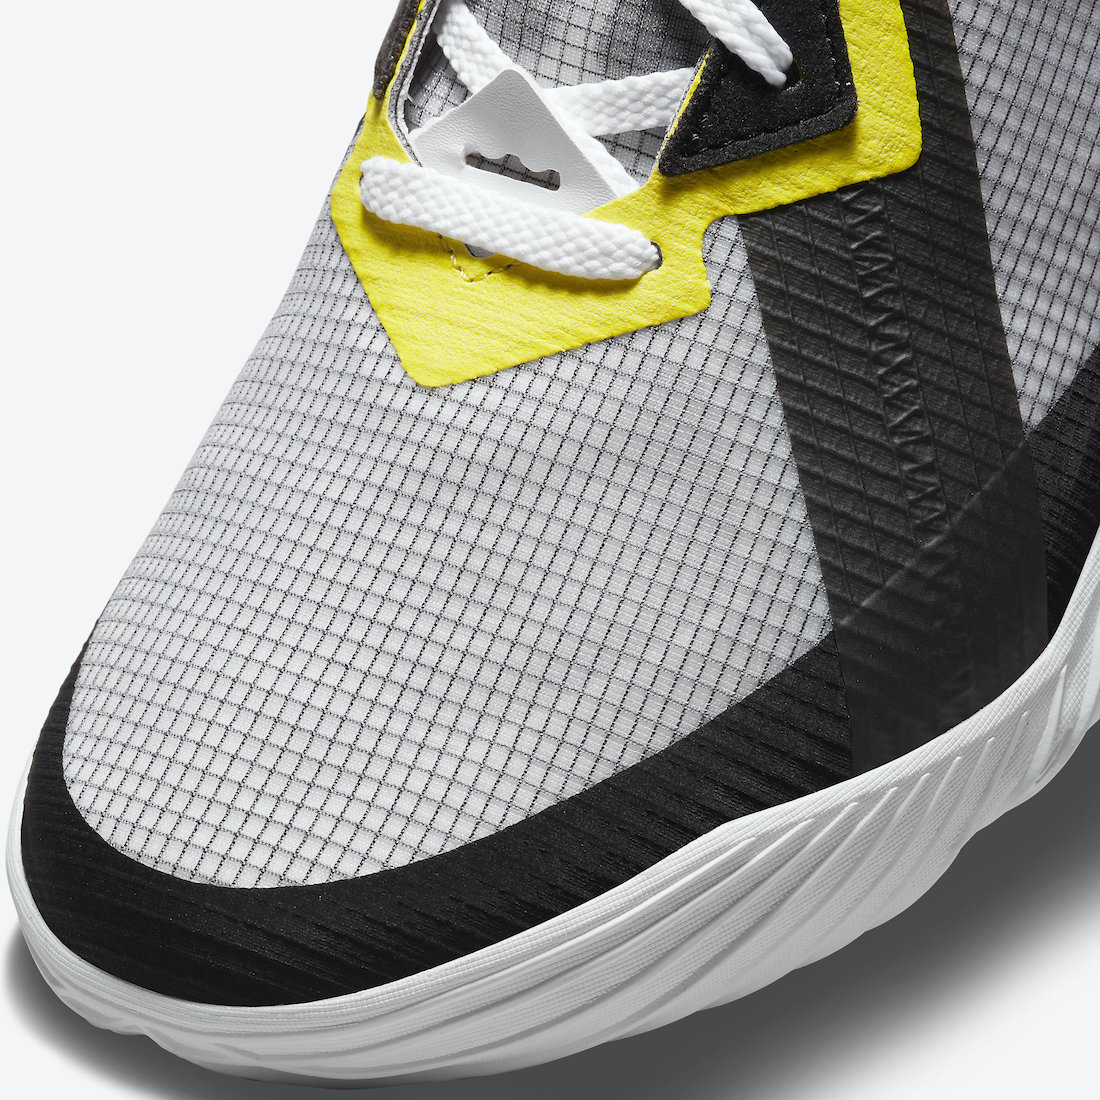 Space Jam Nike LeBron 18 Low Sylvester Tweety CV7562 103 Release Date 6